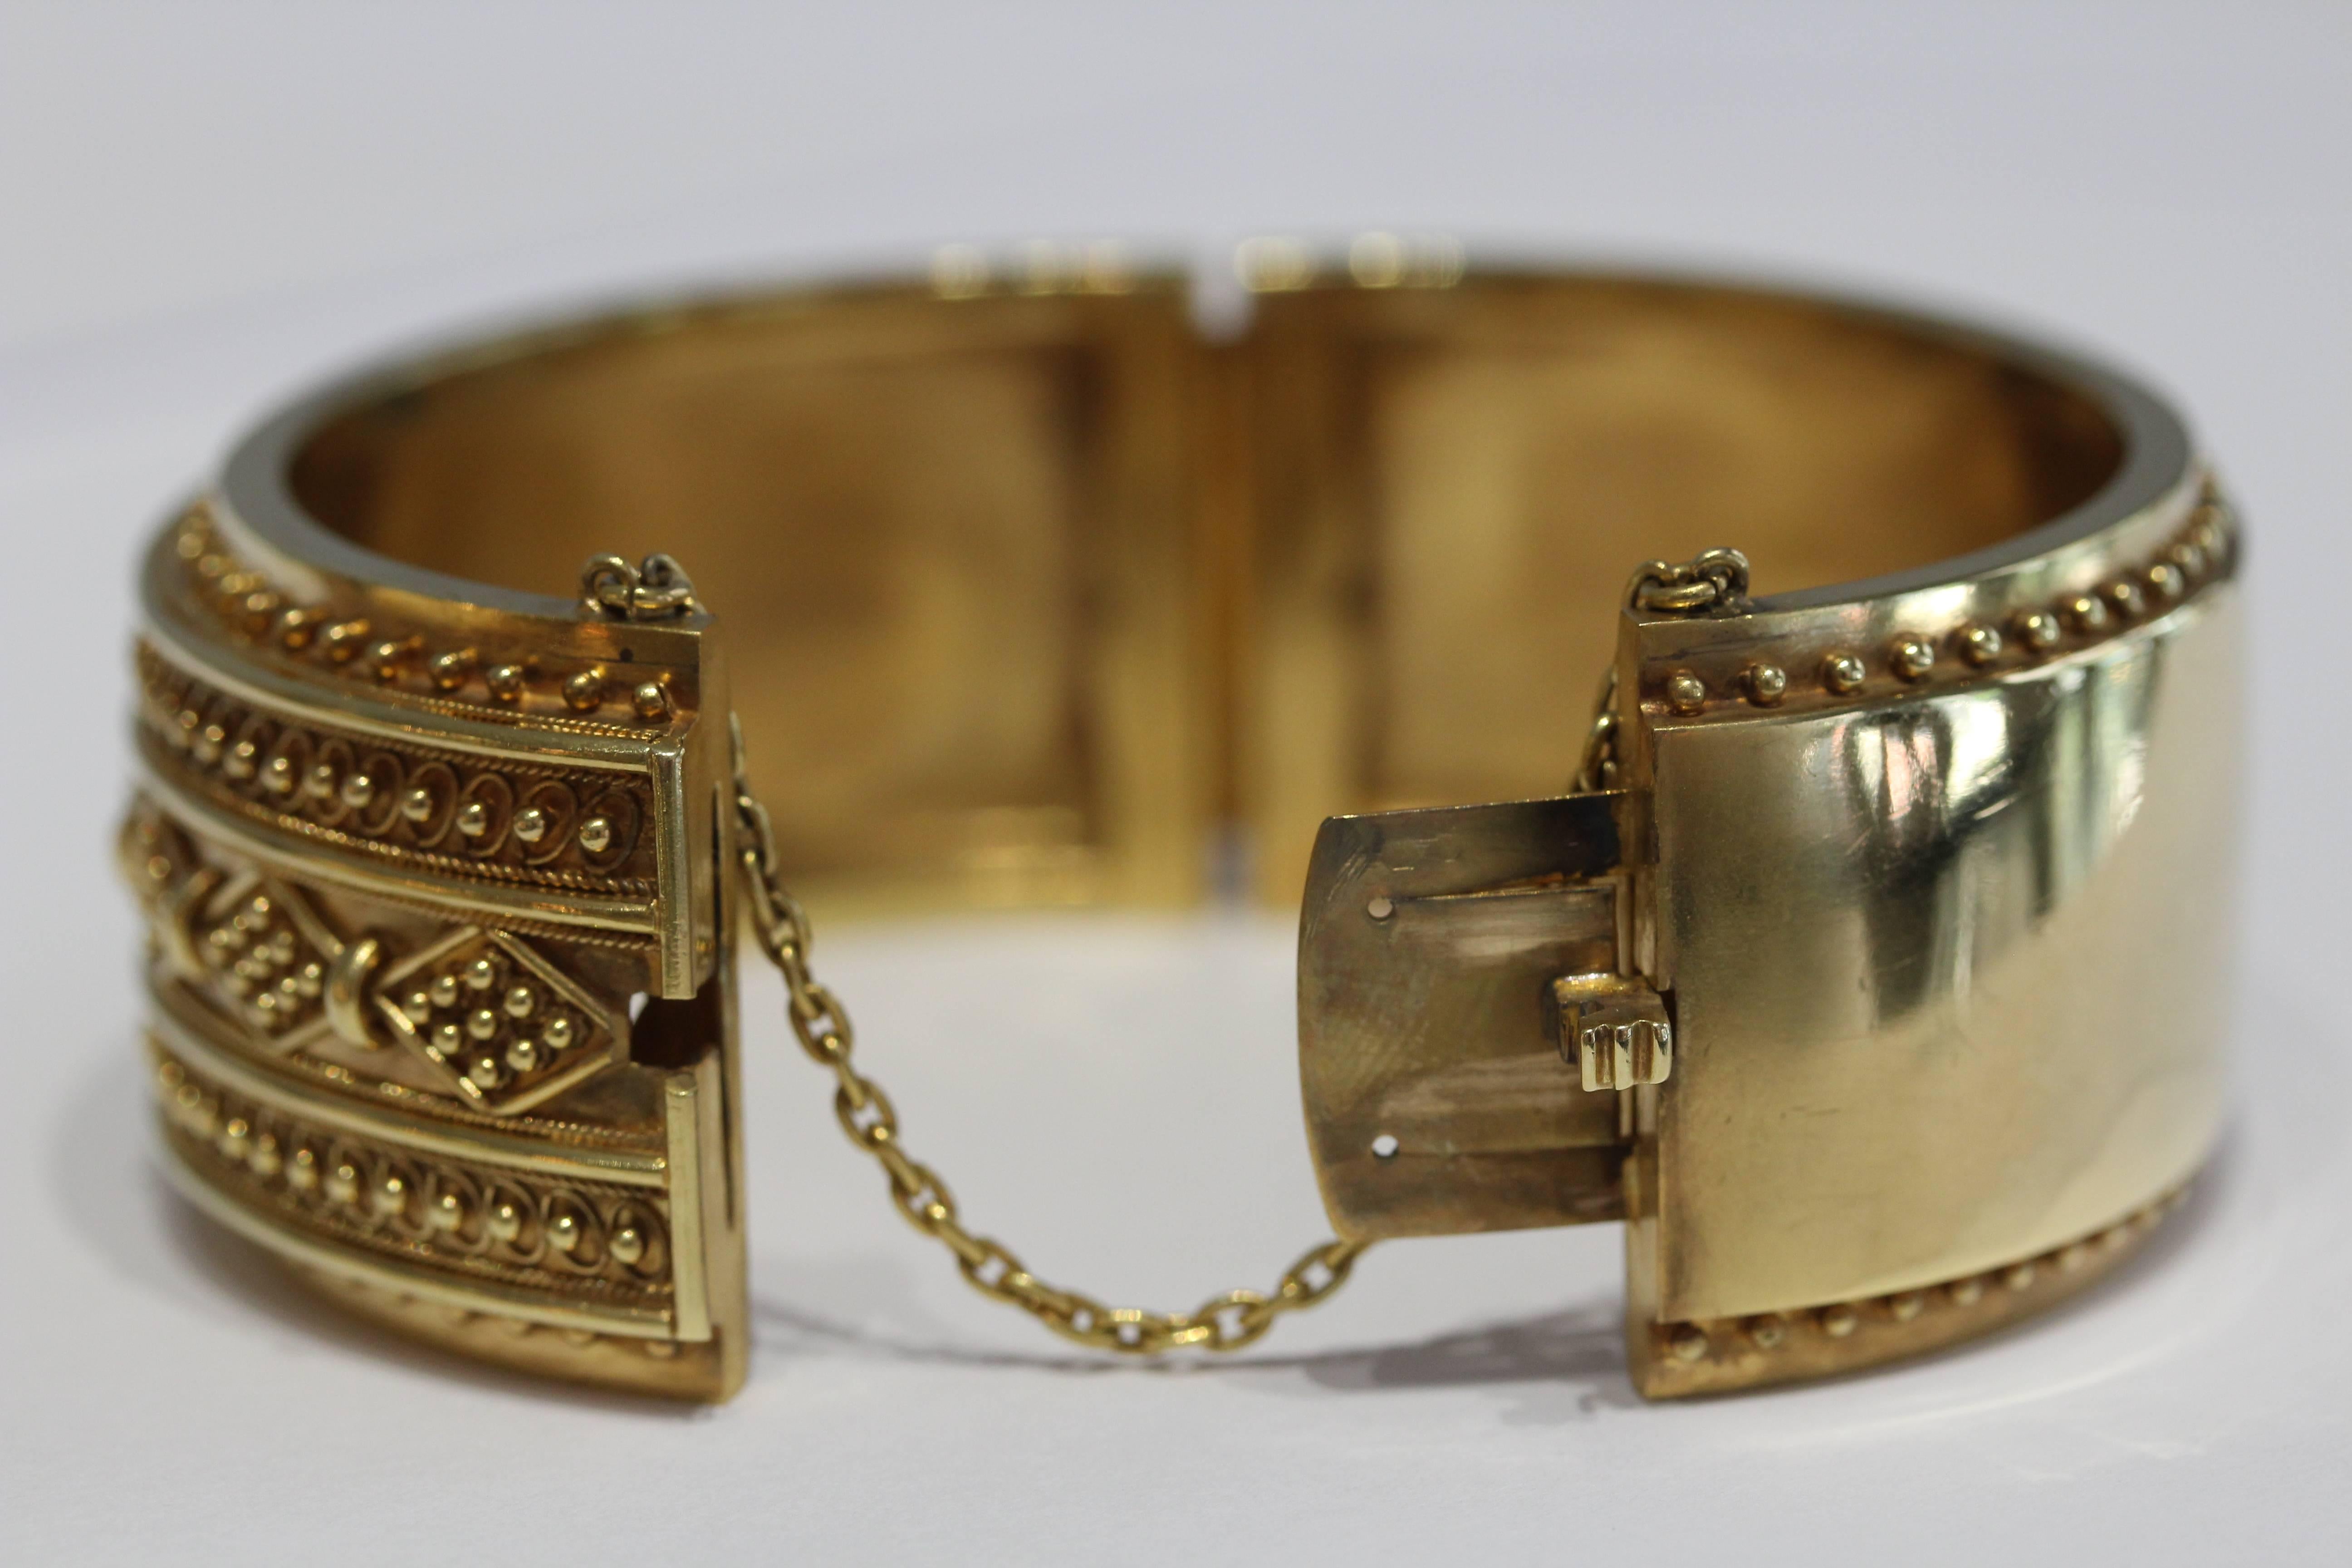 15 Karat yellow gold hinged bangle with granulation design. The bangle
is 25 millimeters wide. English Circa 1890's